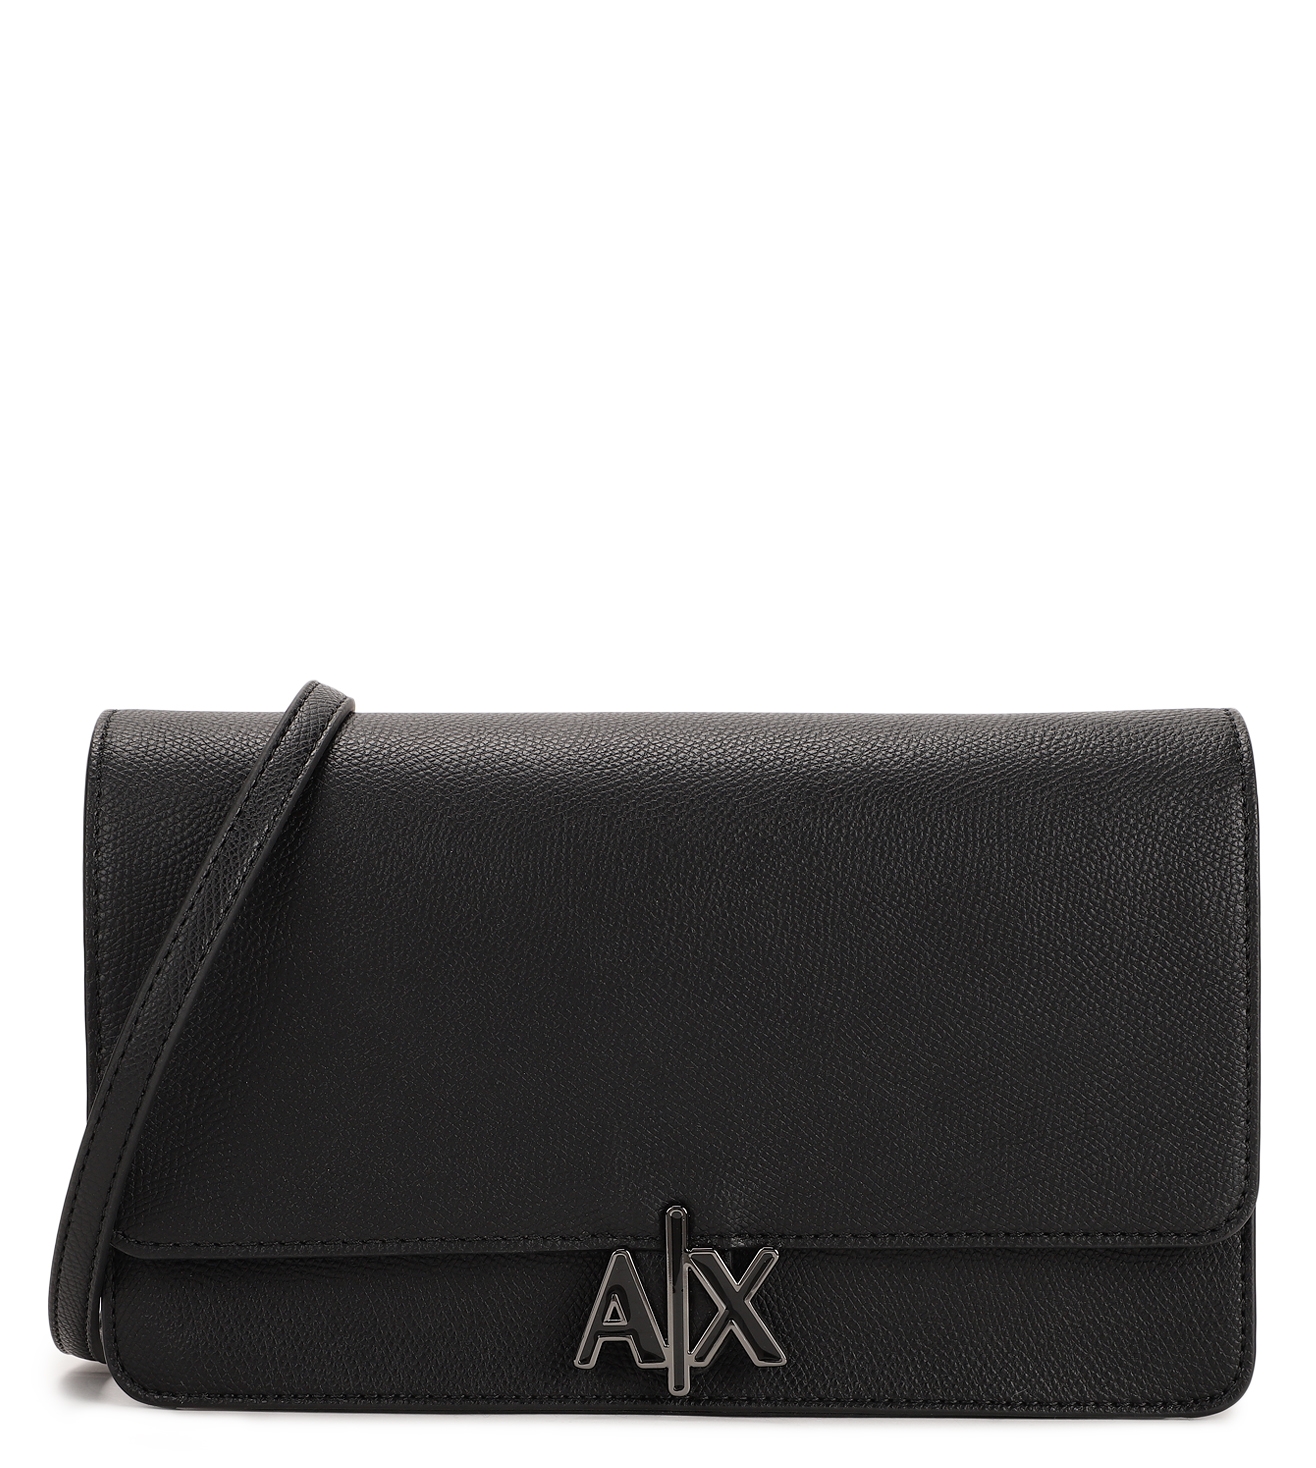 Emporio Armani Shopper Bags & Totes for Women on sale - Outlet |  FASHIOLA.co.uk